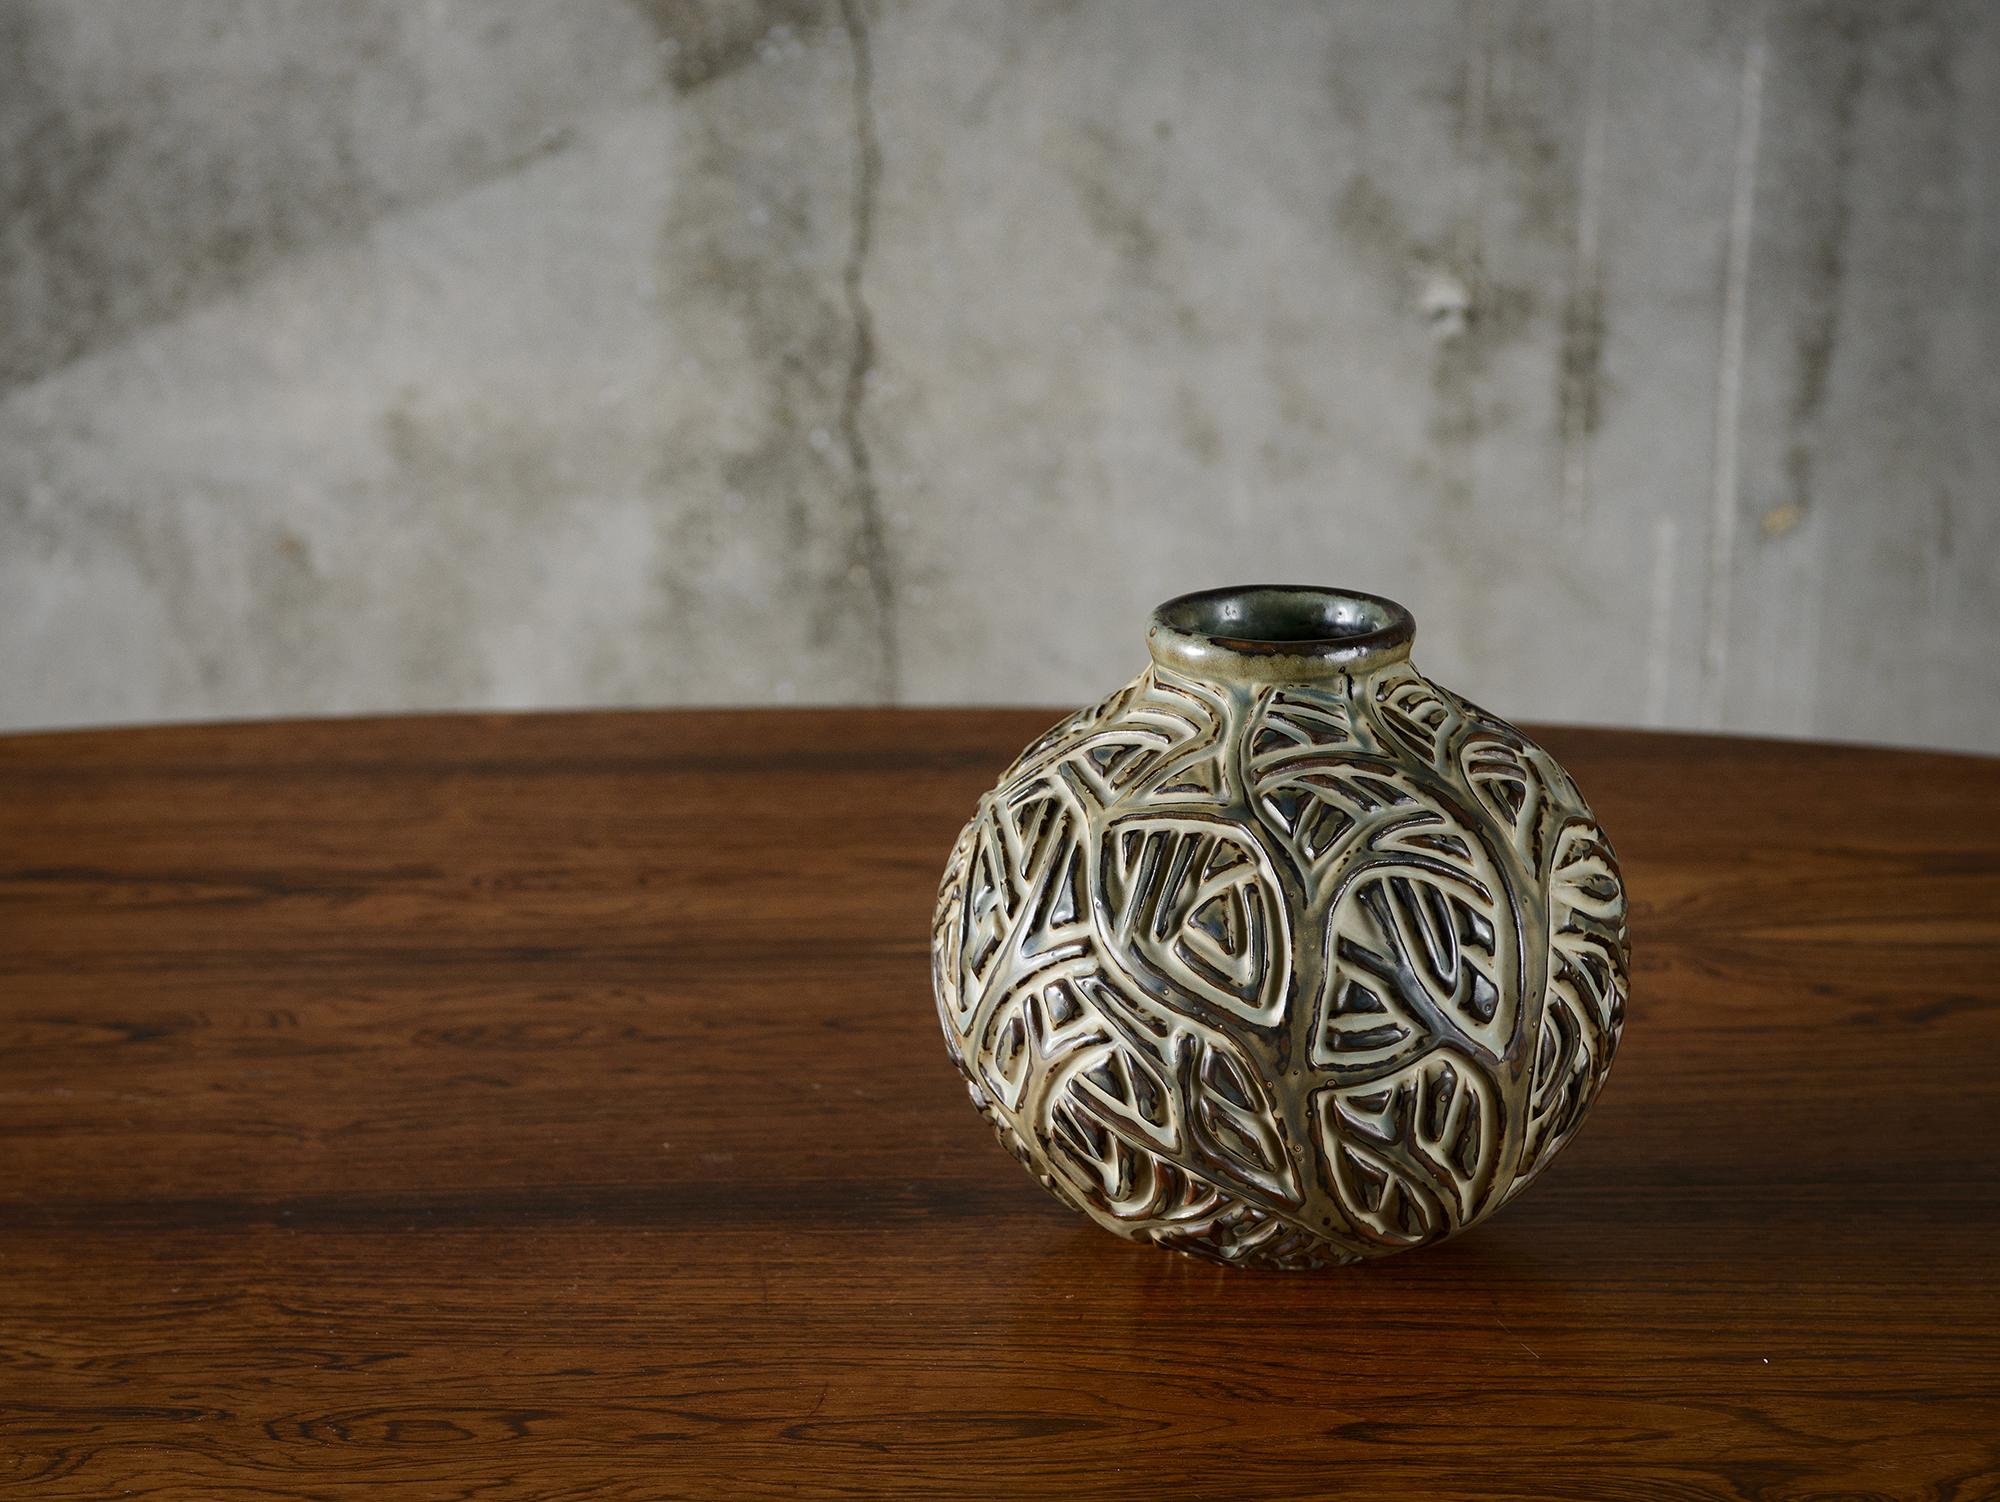 Axel Salto vase model 20560, 1969 for Royal Copenhagen stoneware, incised marks.